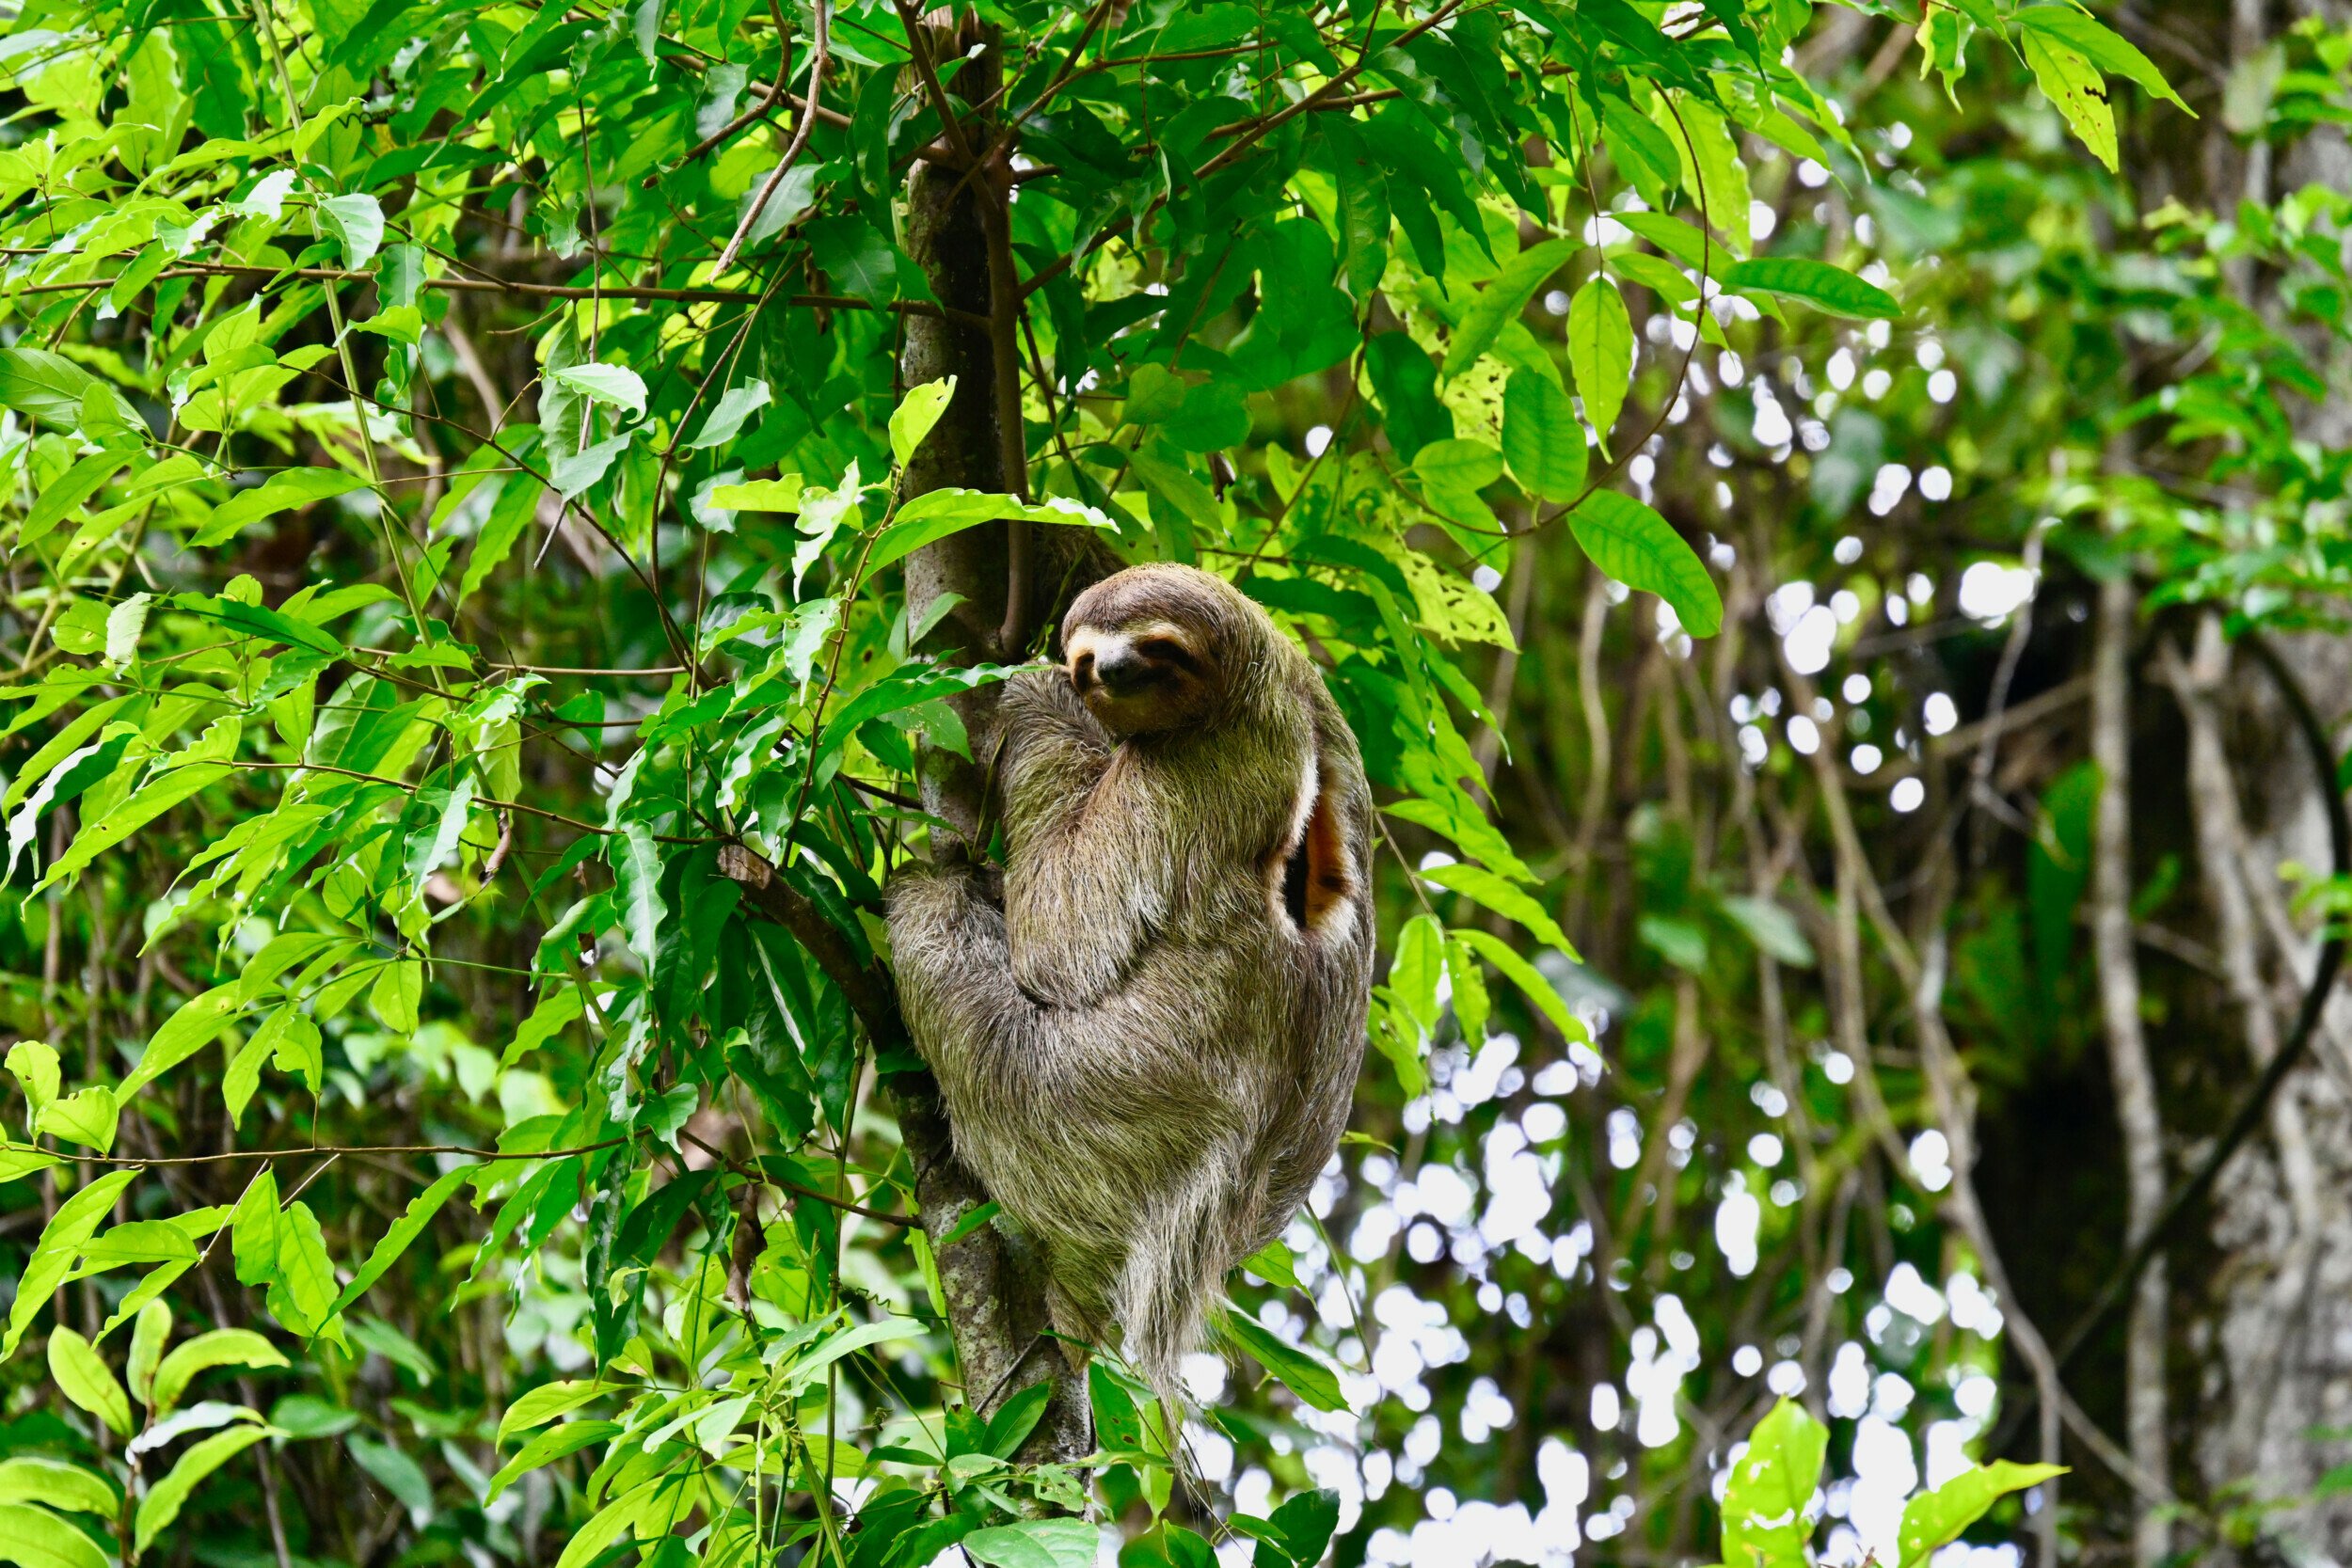 Manuel Antonio National Park: A Tropical Paradise in Costa Rica